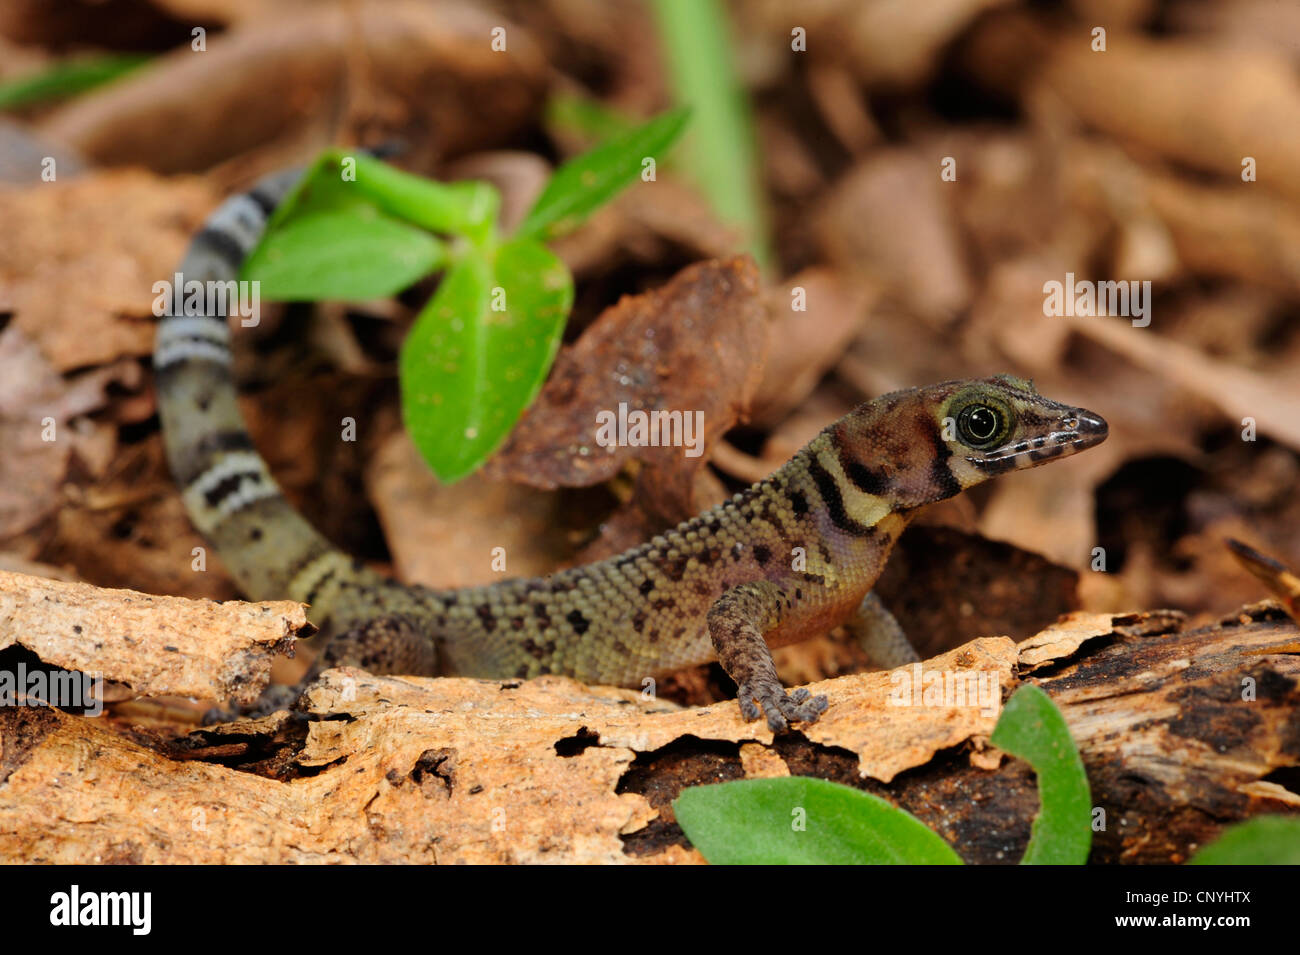 Bay Island Least Gecko, Bay Island dwarf gecko (Sphaerodactylus rosaurae), sitting on wood, Honduras, Roatan, Bay Islands Stock Photo